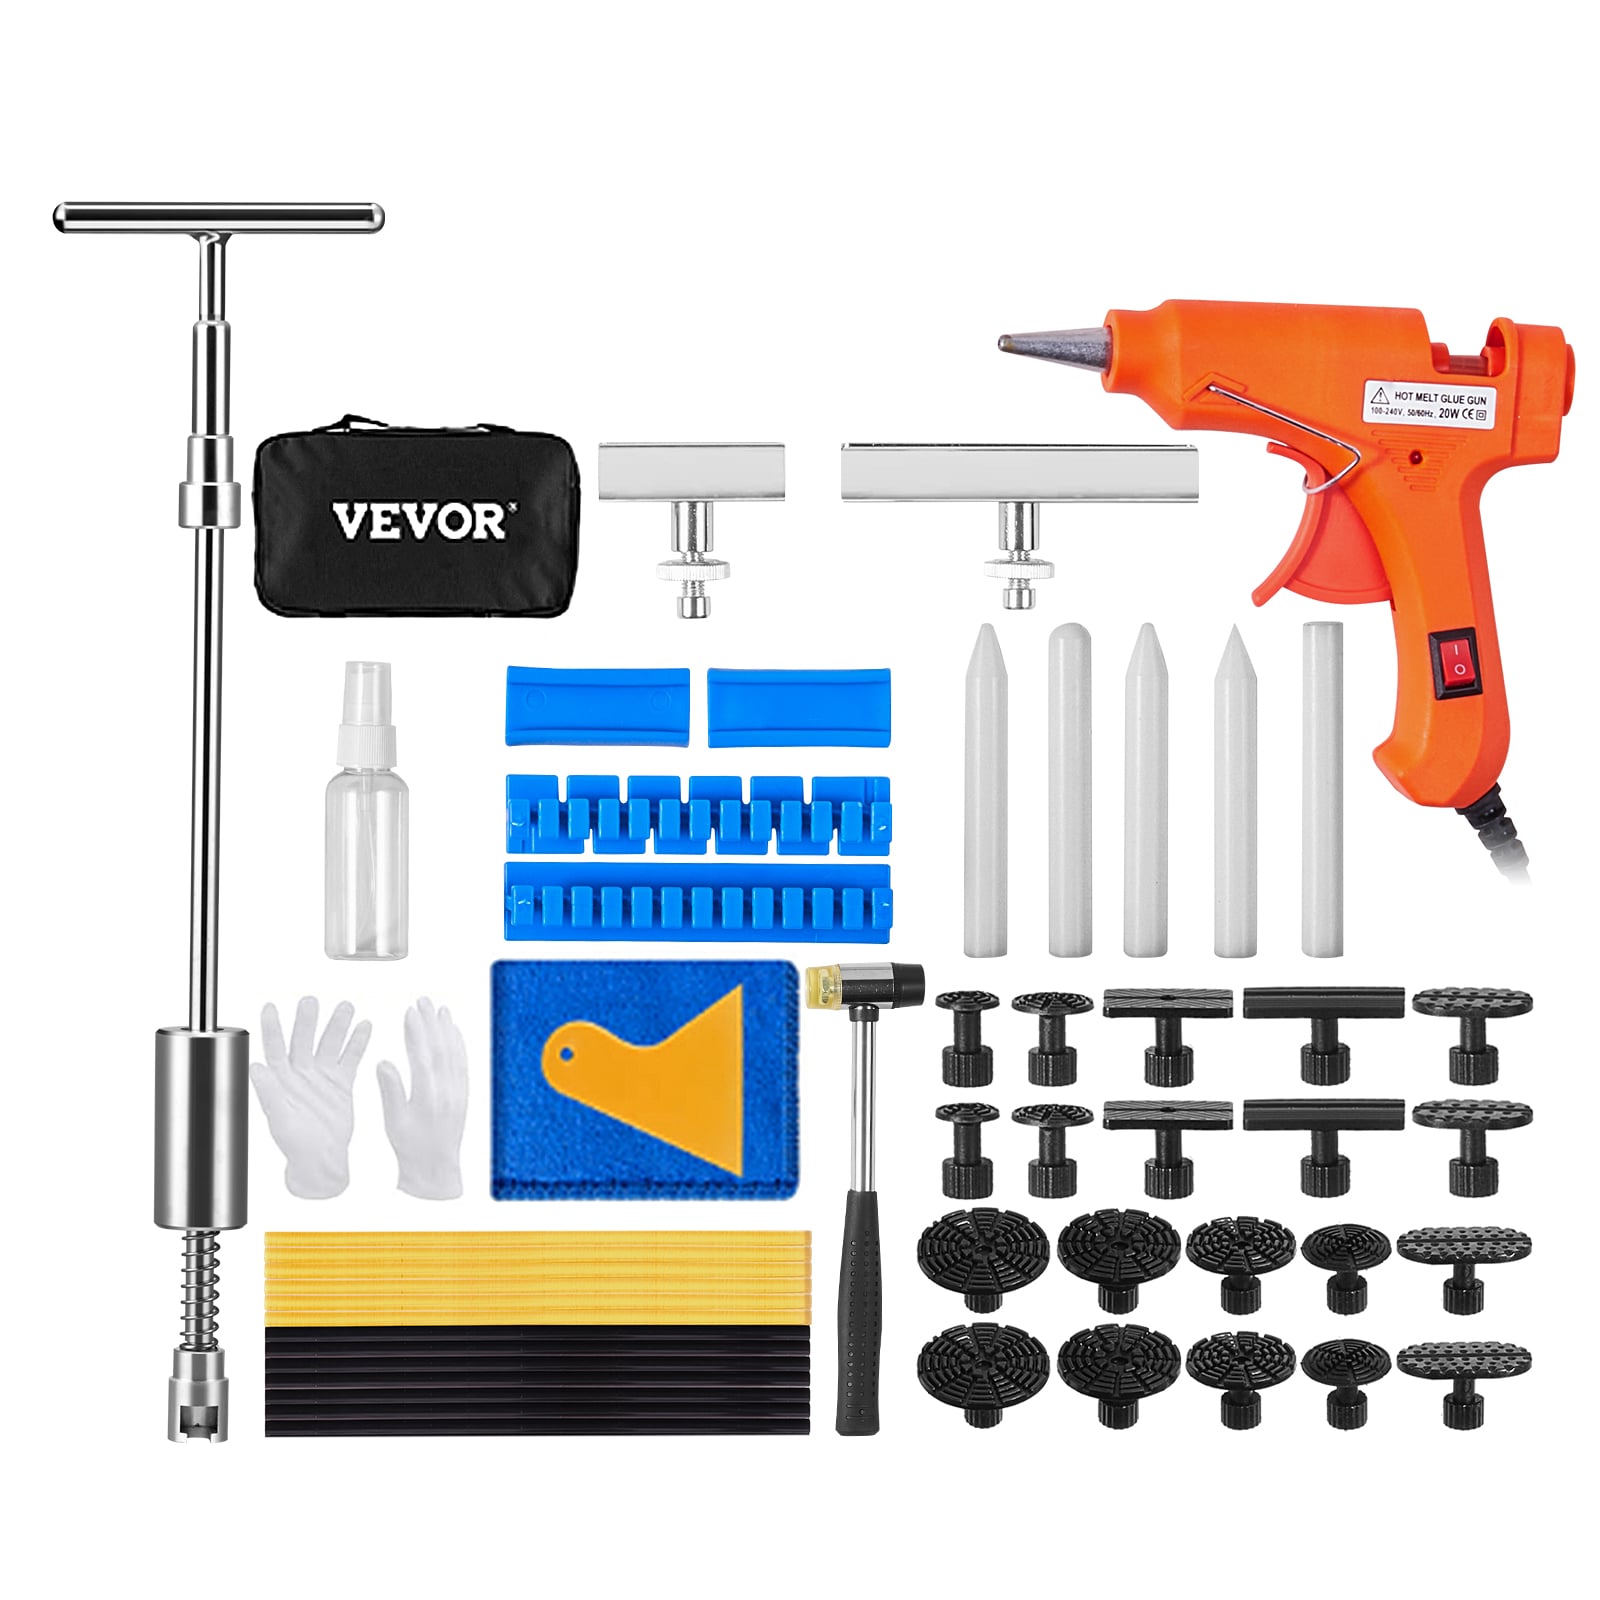 VEVOR 107 PCS Dent Removal Kit Paintless Dent Puller with Golden Lifter  Bridge Puller Slide Hammer T-bar for Auto Body Repair CSLBGJSJTJ107AP1TV1 -  The Home Depot